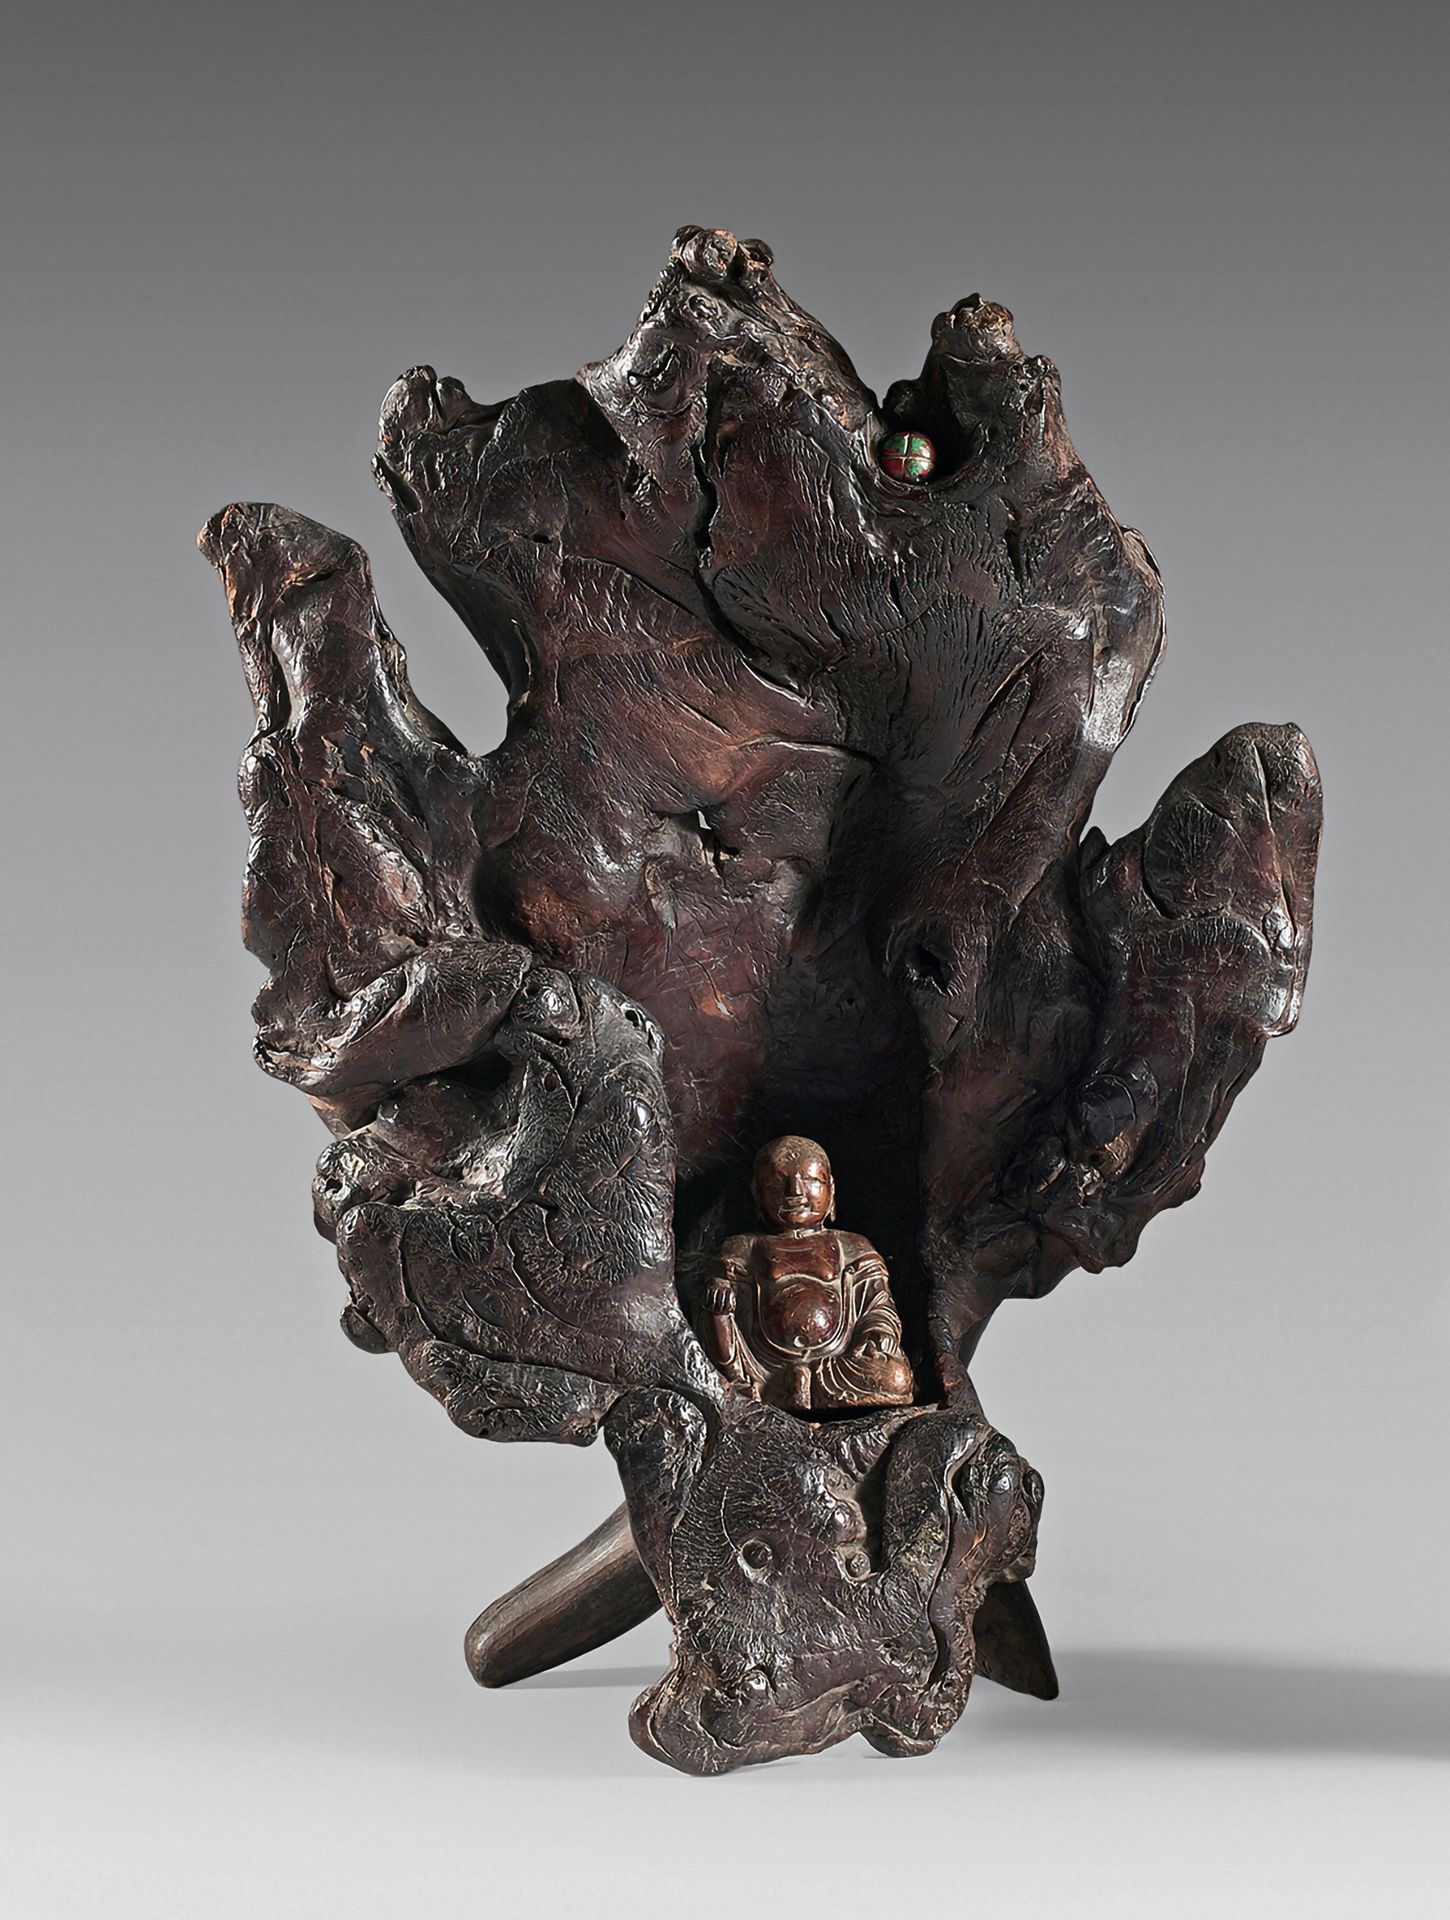 CHINE - XIXe siècle 重要的洞天福地，有一尊木雕佛像，左腿坐着，右腿折叠，两只手都放在膝盖上。
高度：49厘米
佛像的高度：9.8厘米